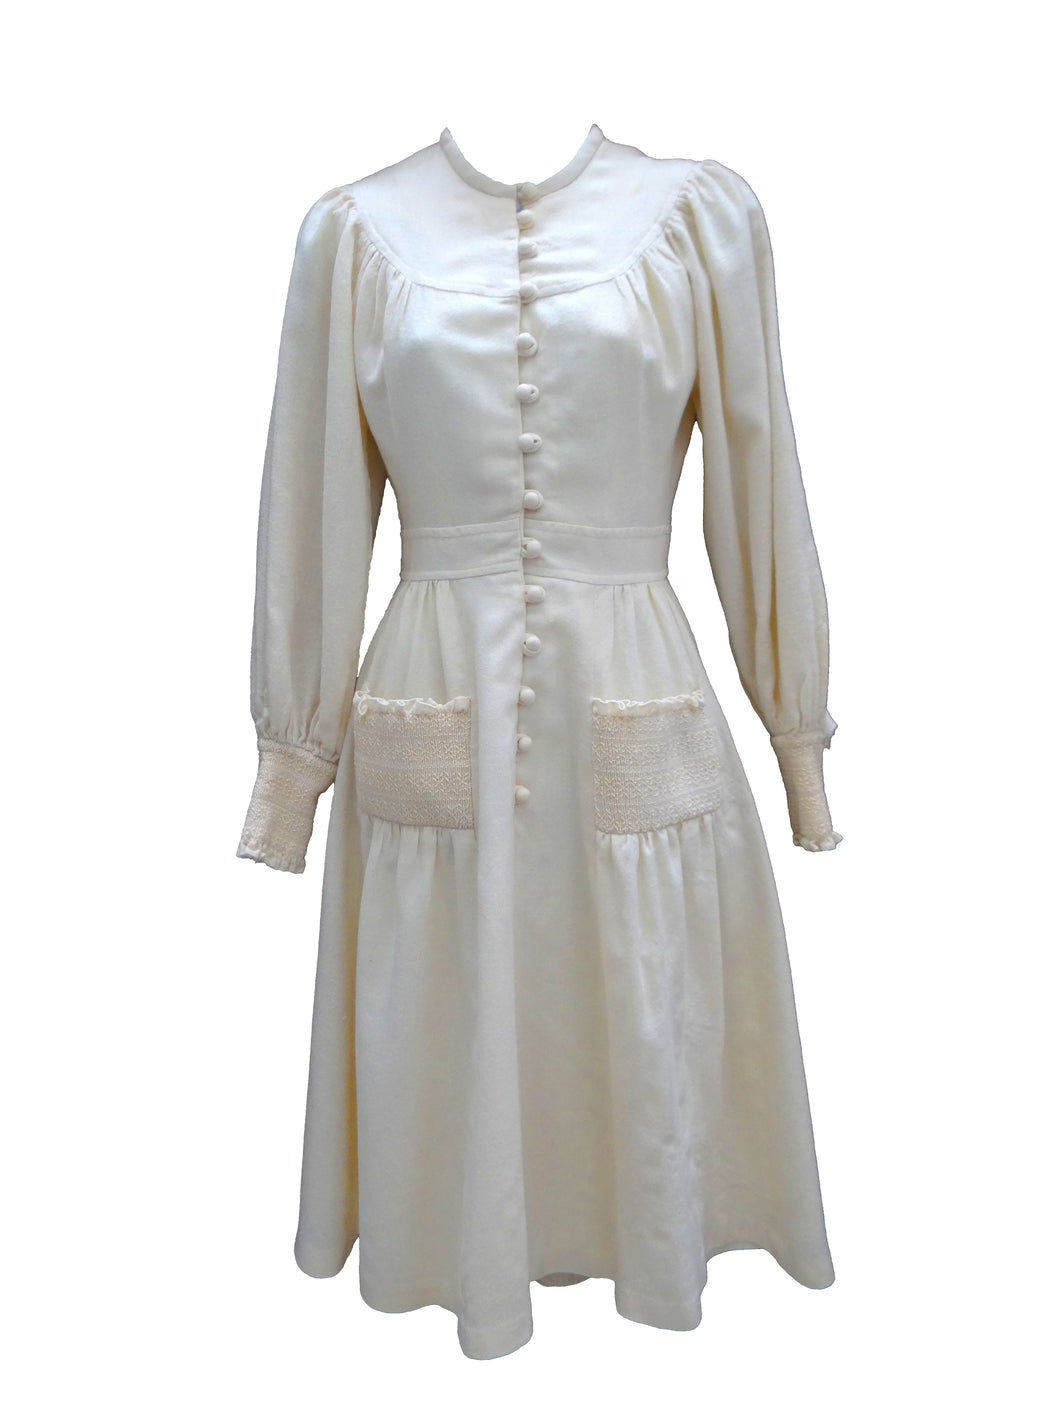 Vintage Ivory Wool Crepe Button-through Dress with Smocking, UK6-8